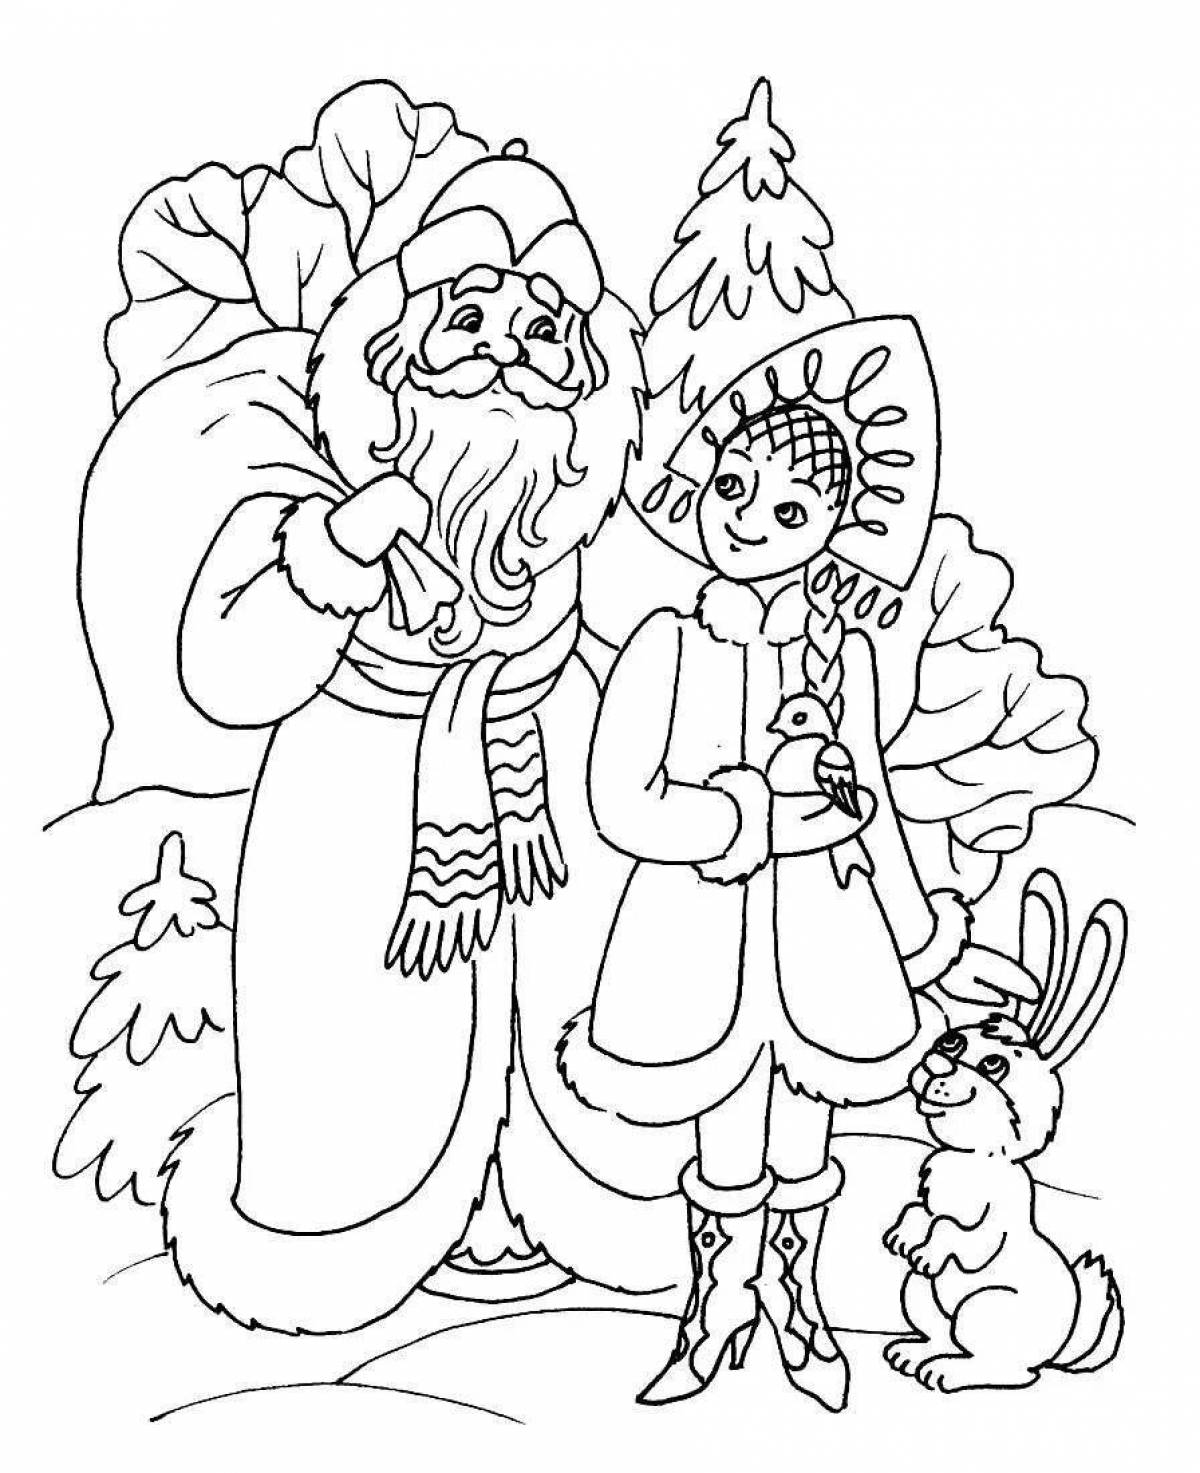 Glowing santa claus coloring page